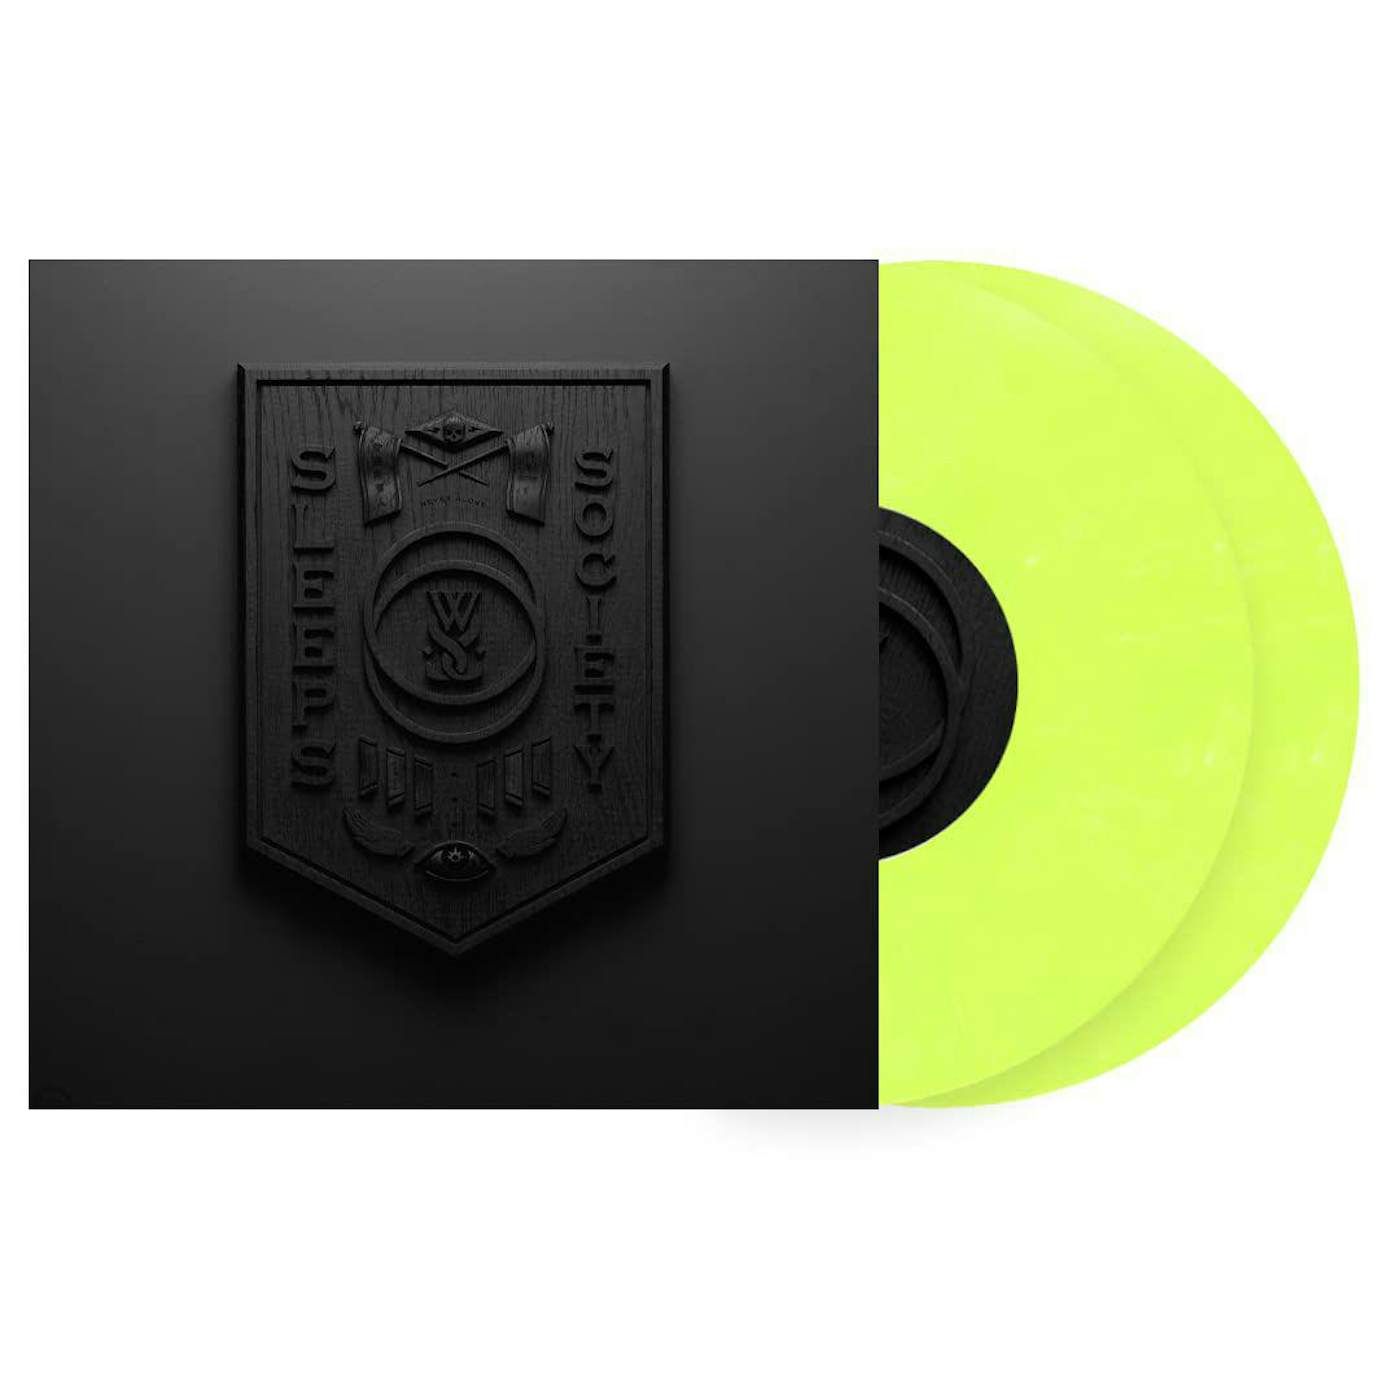 While She Sleeps SLEEPS SOCIETY Vinyl Record - Colored Vinyl, Deluxe Edition, Yellow Vinyl